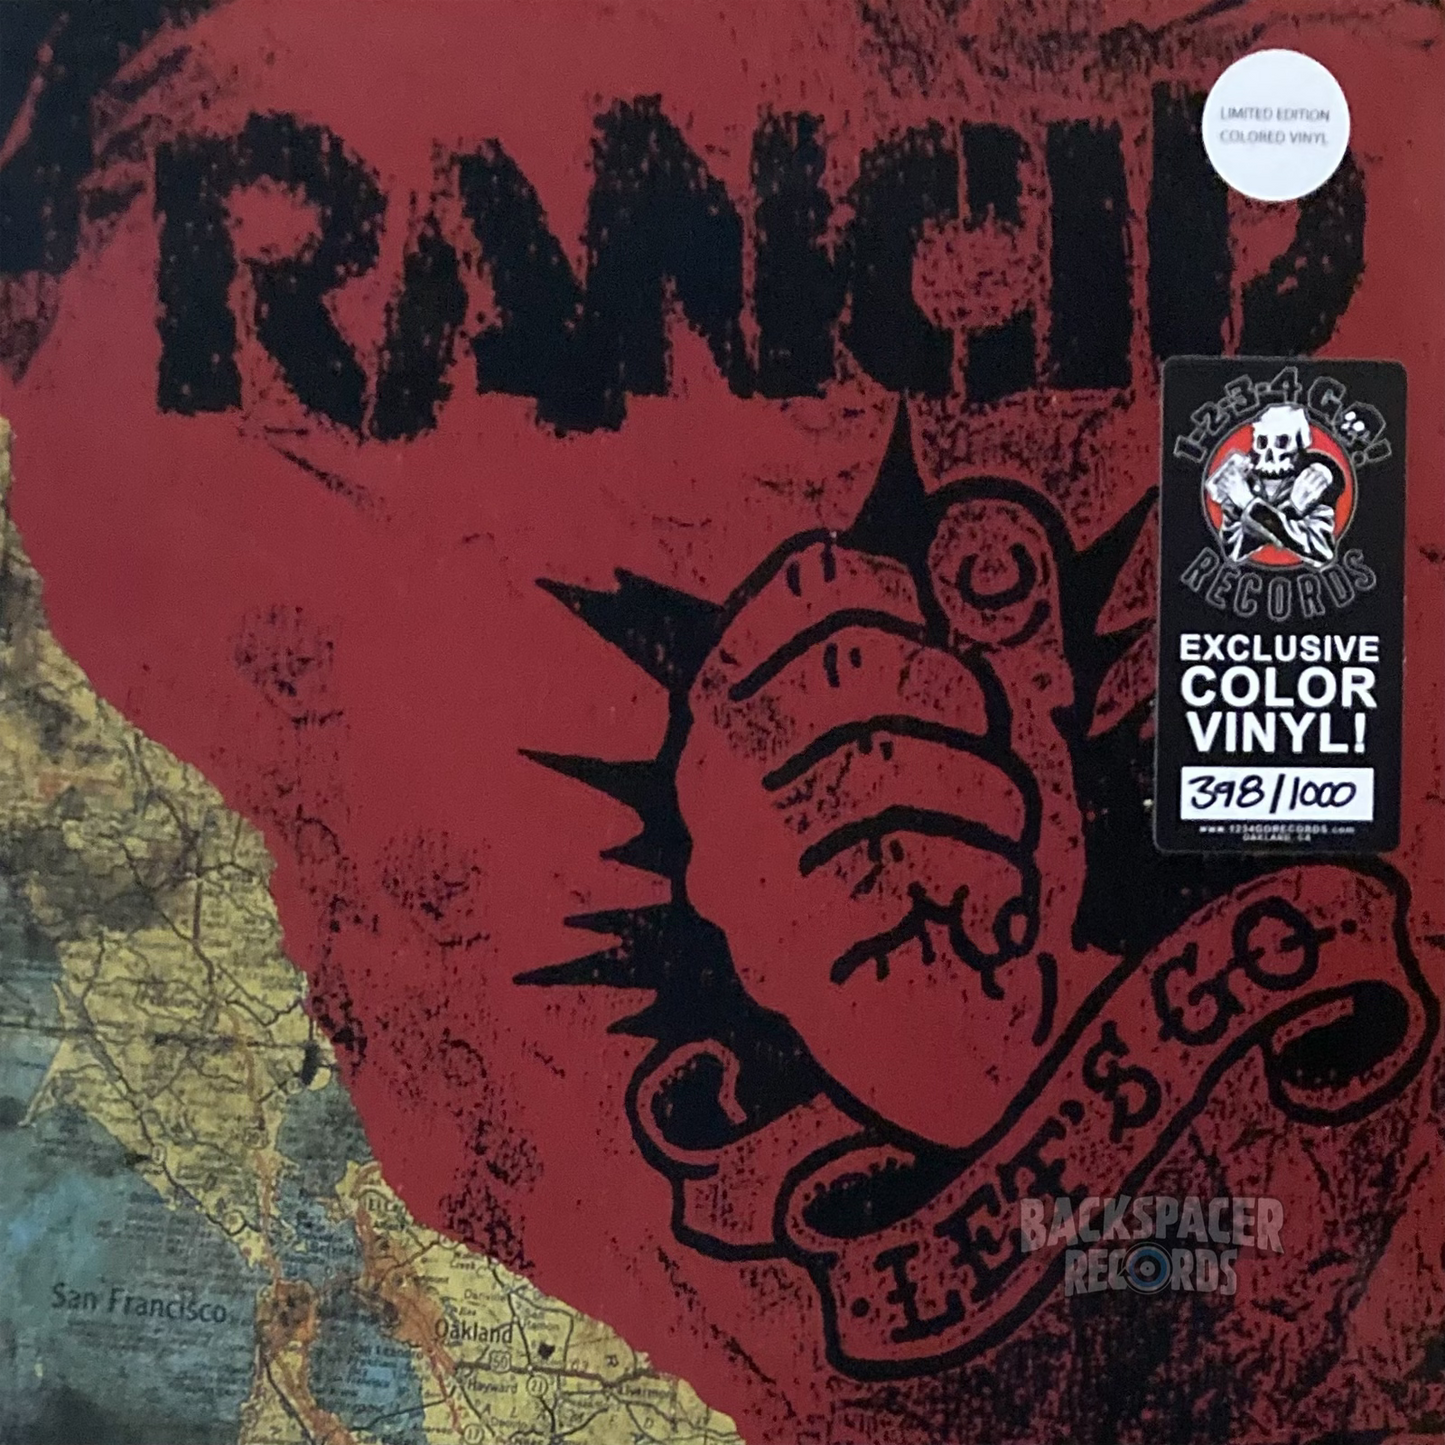 Rancid - Let's Go (Limited Edition) LP (Sealed)